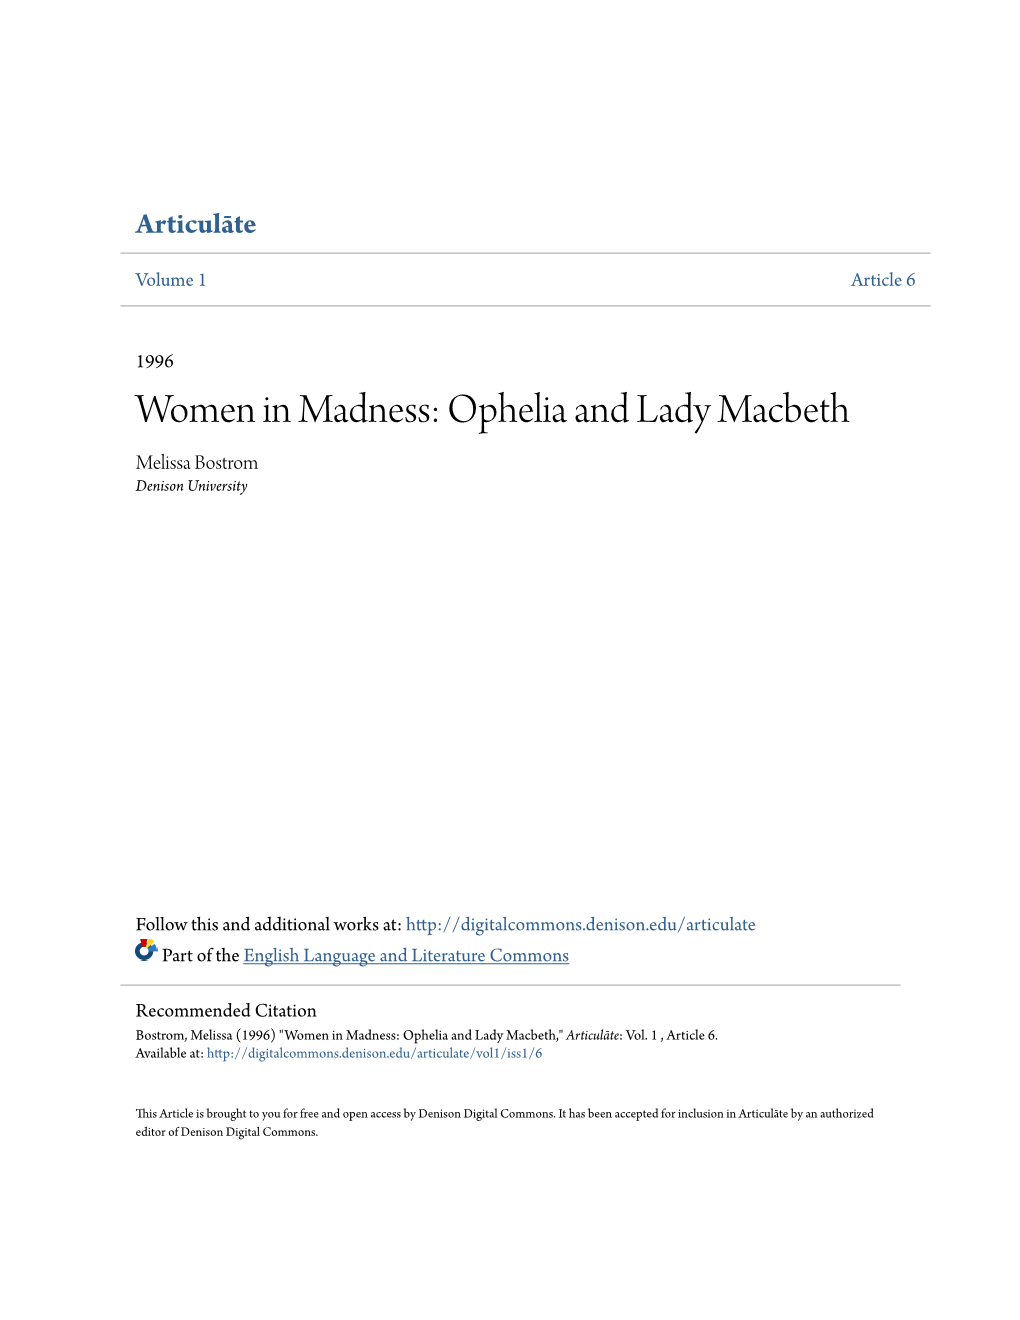 Ophelia and Lady Macbeth Melissa Bostrom Denison University